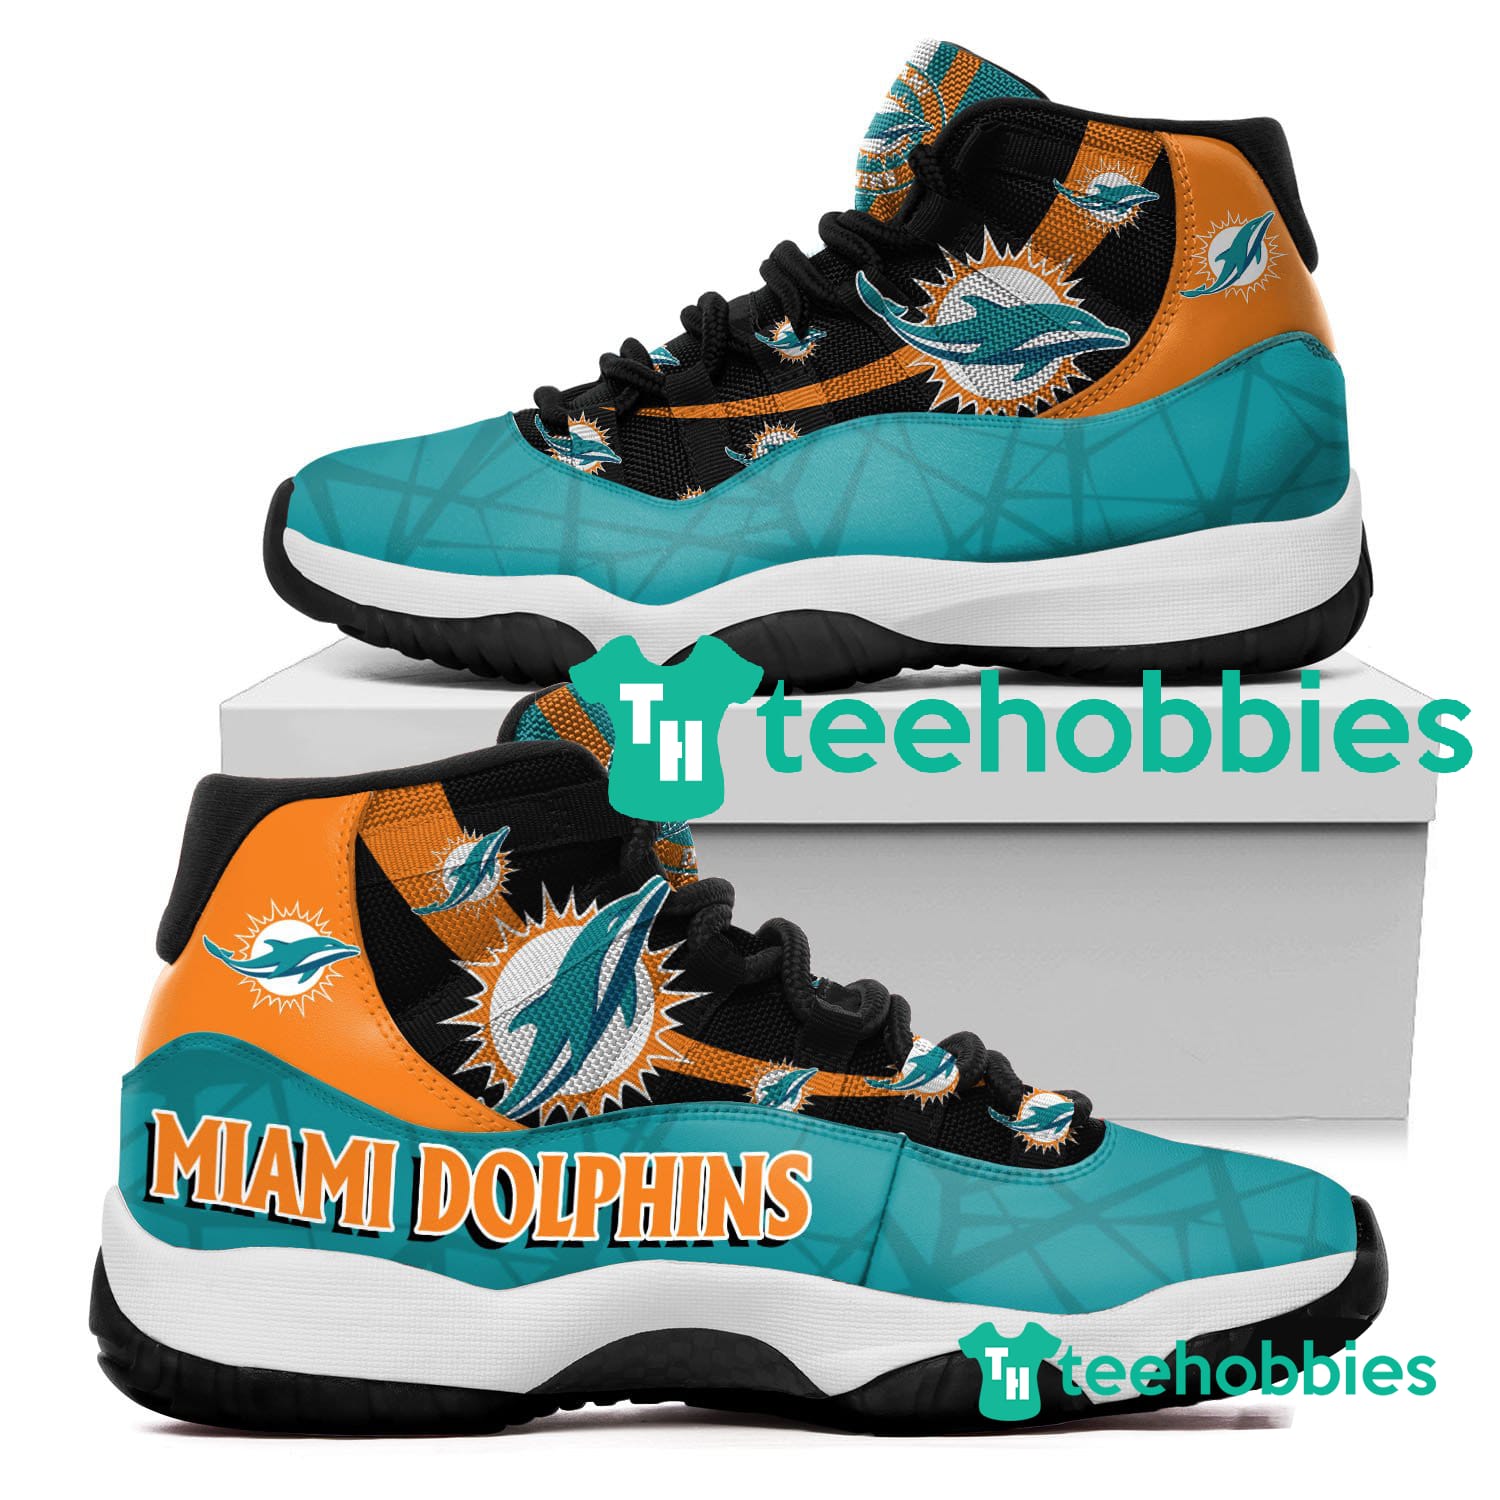 Miami Dolphins Logo Air Jordan 11 Sneakers Shoes